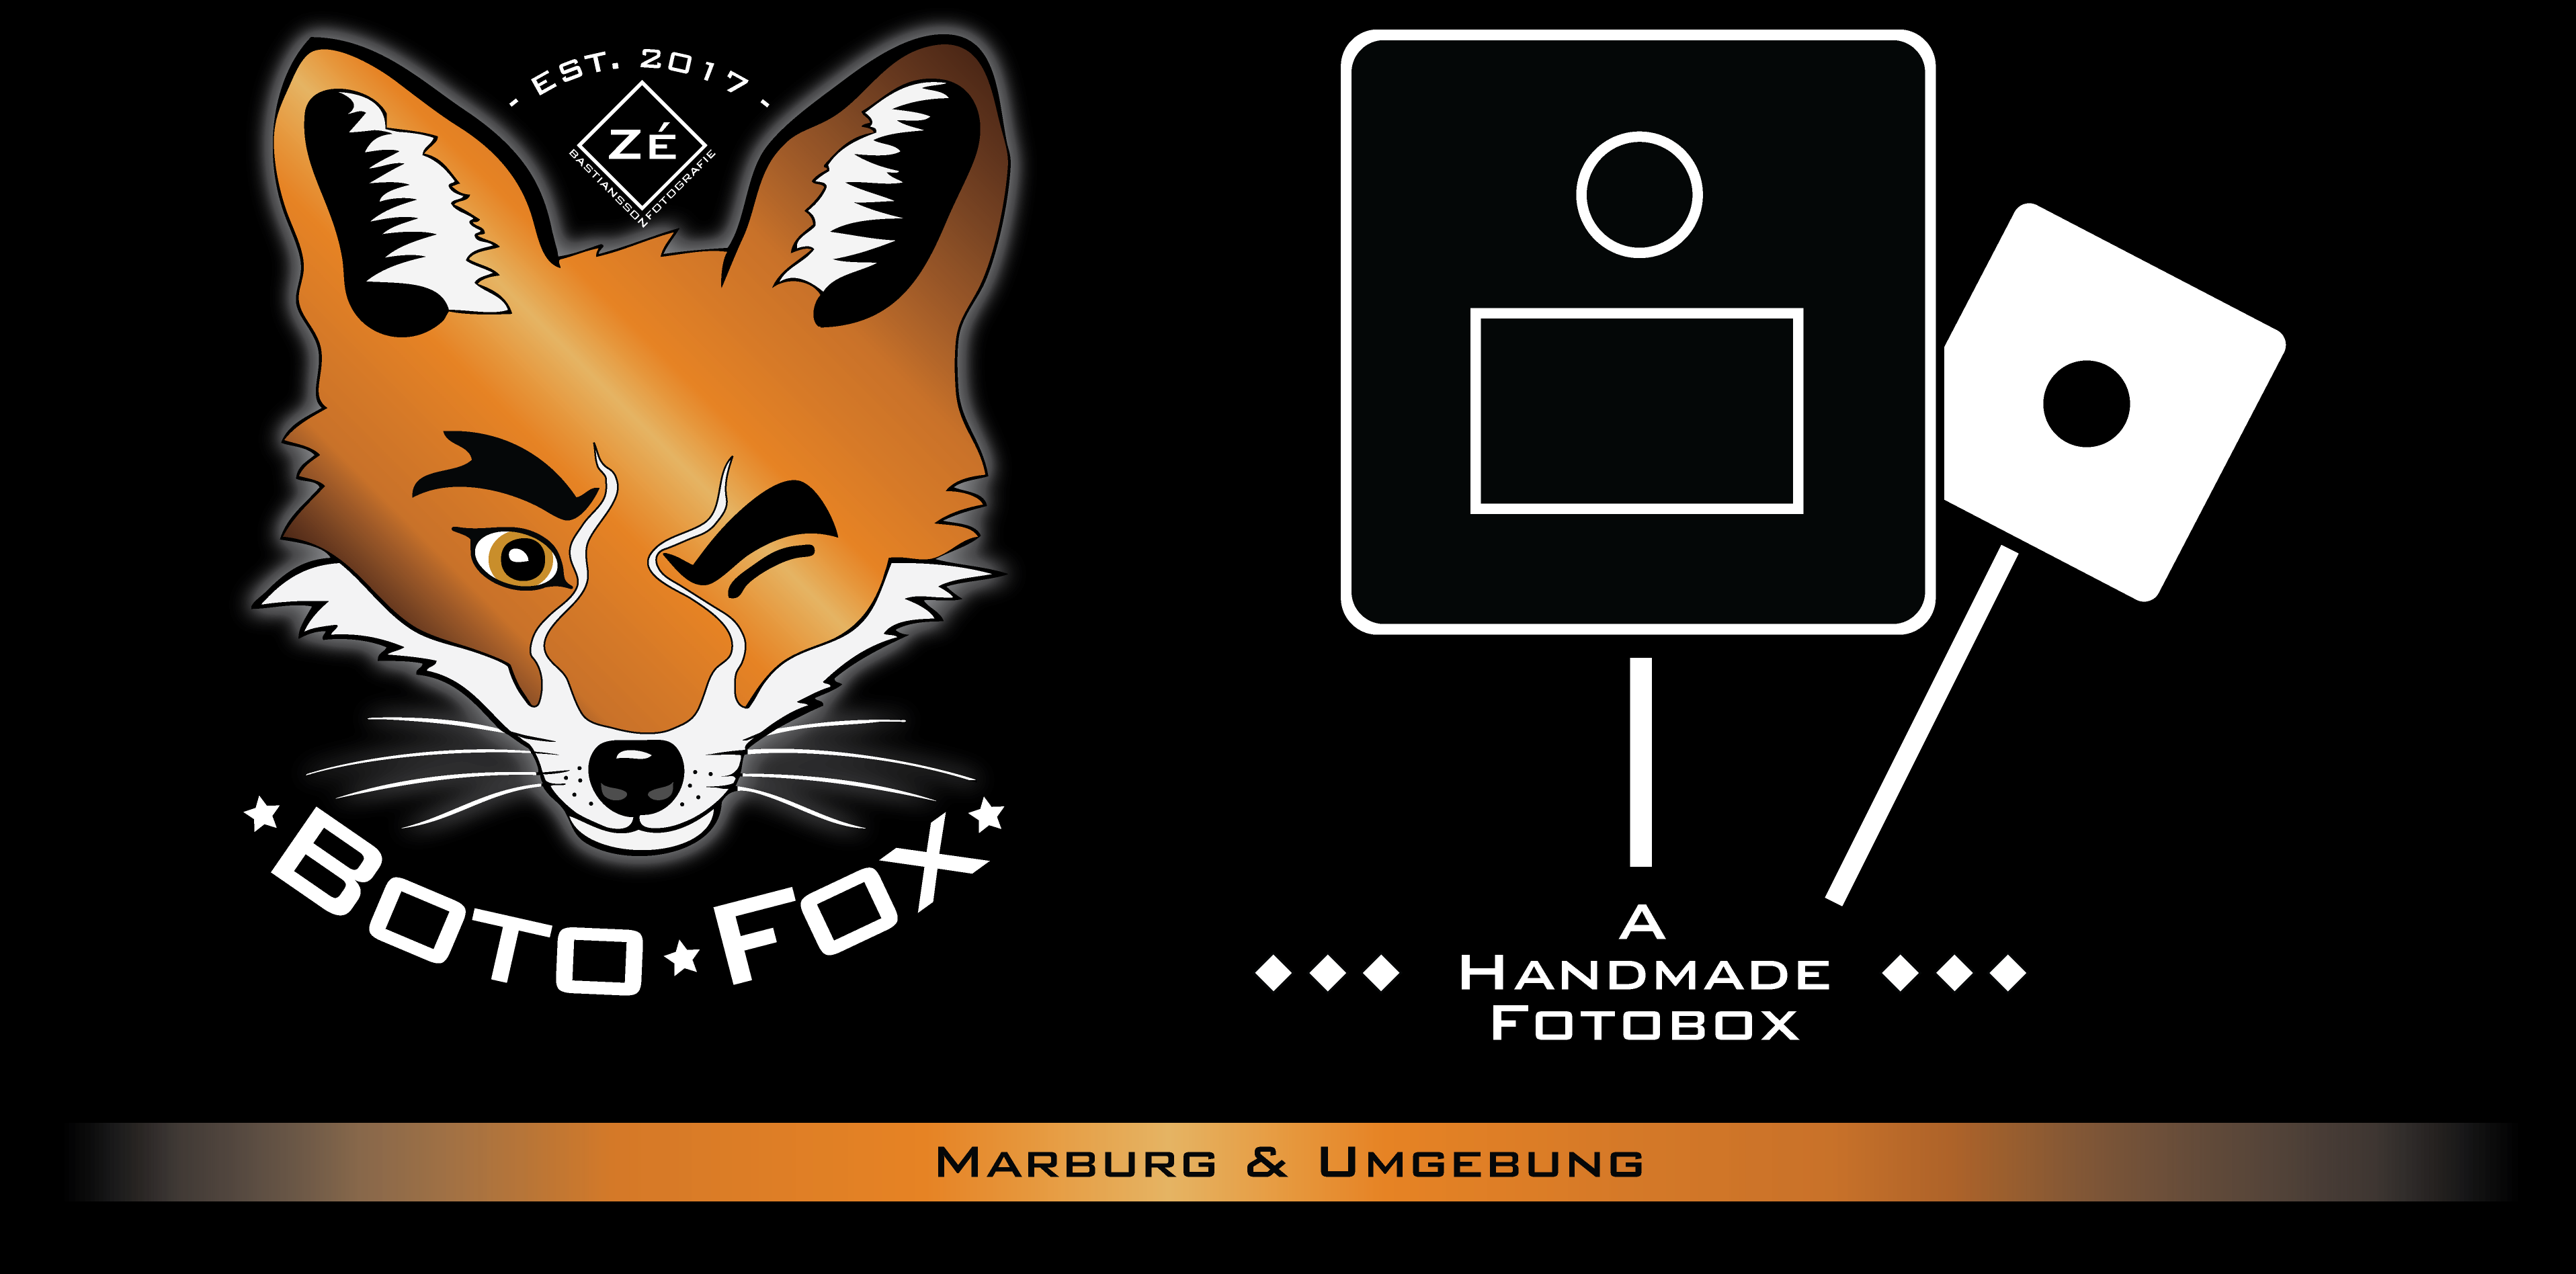 Boto Fox - A Handmade Fotobox